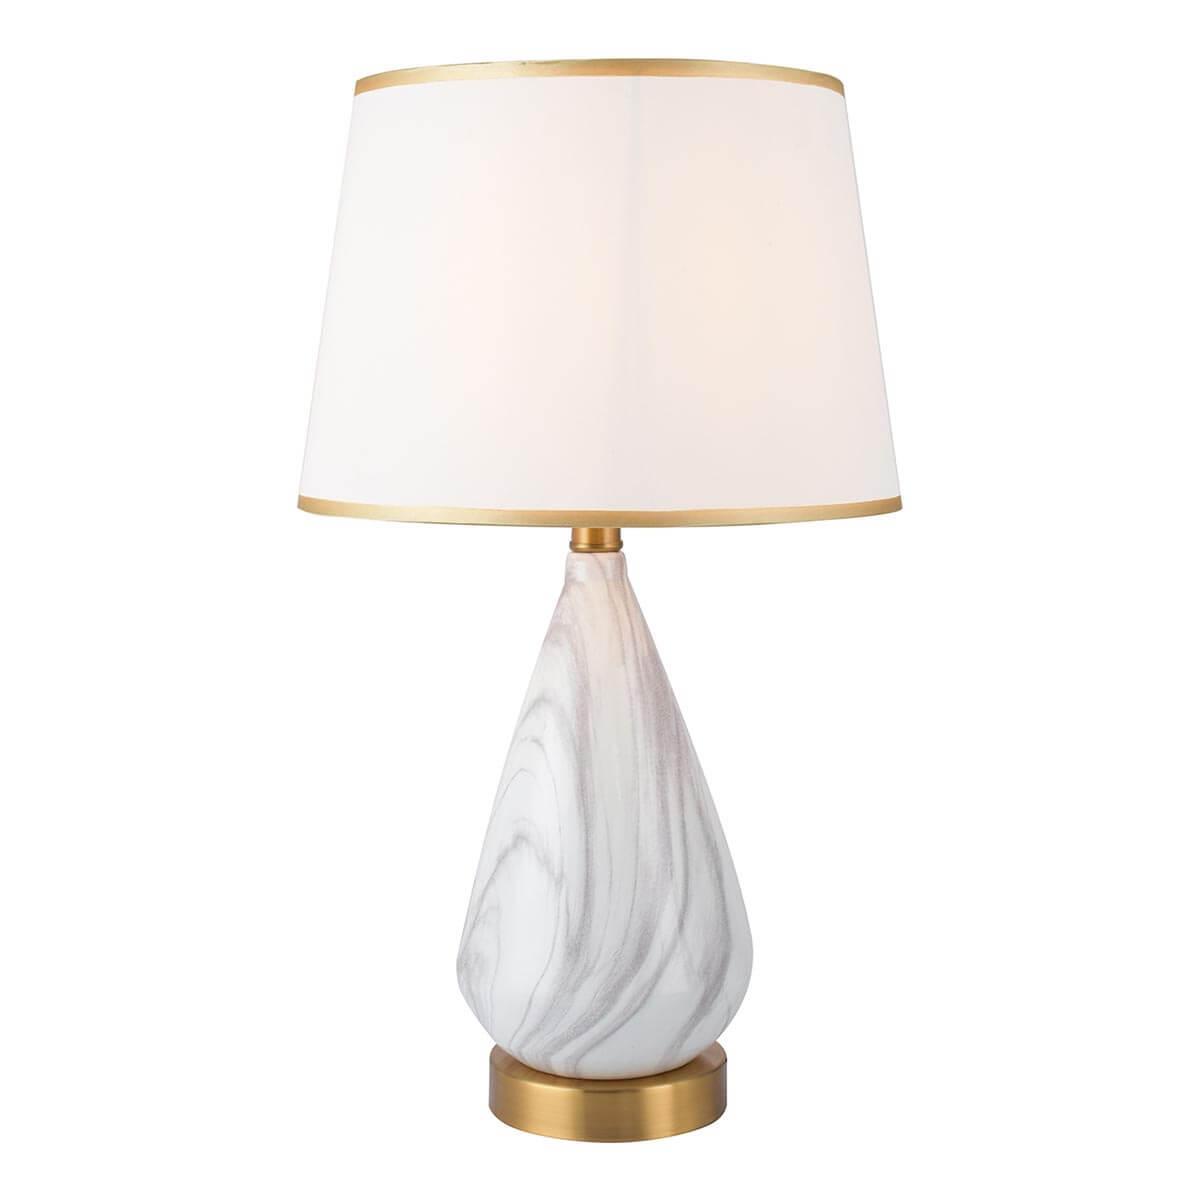 Настольная лампа Toplight Gwendoline TL0292A-T лампа настольная 16138 1 e27 40вт led подсветка бело золотой 28х28х45 см